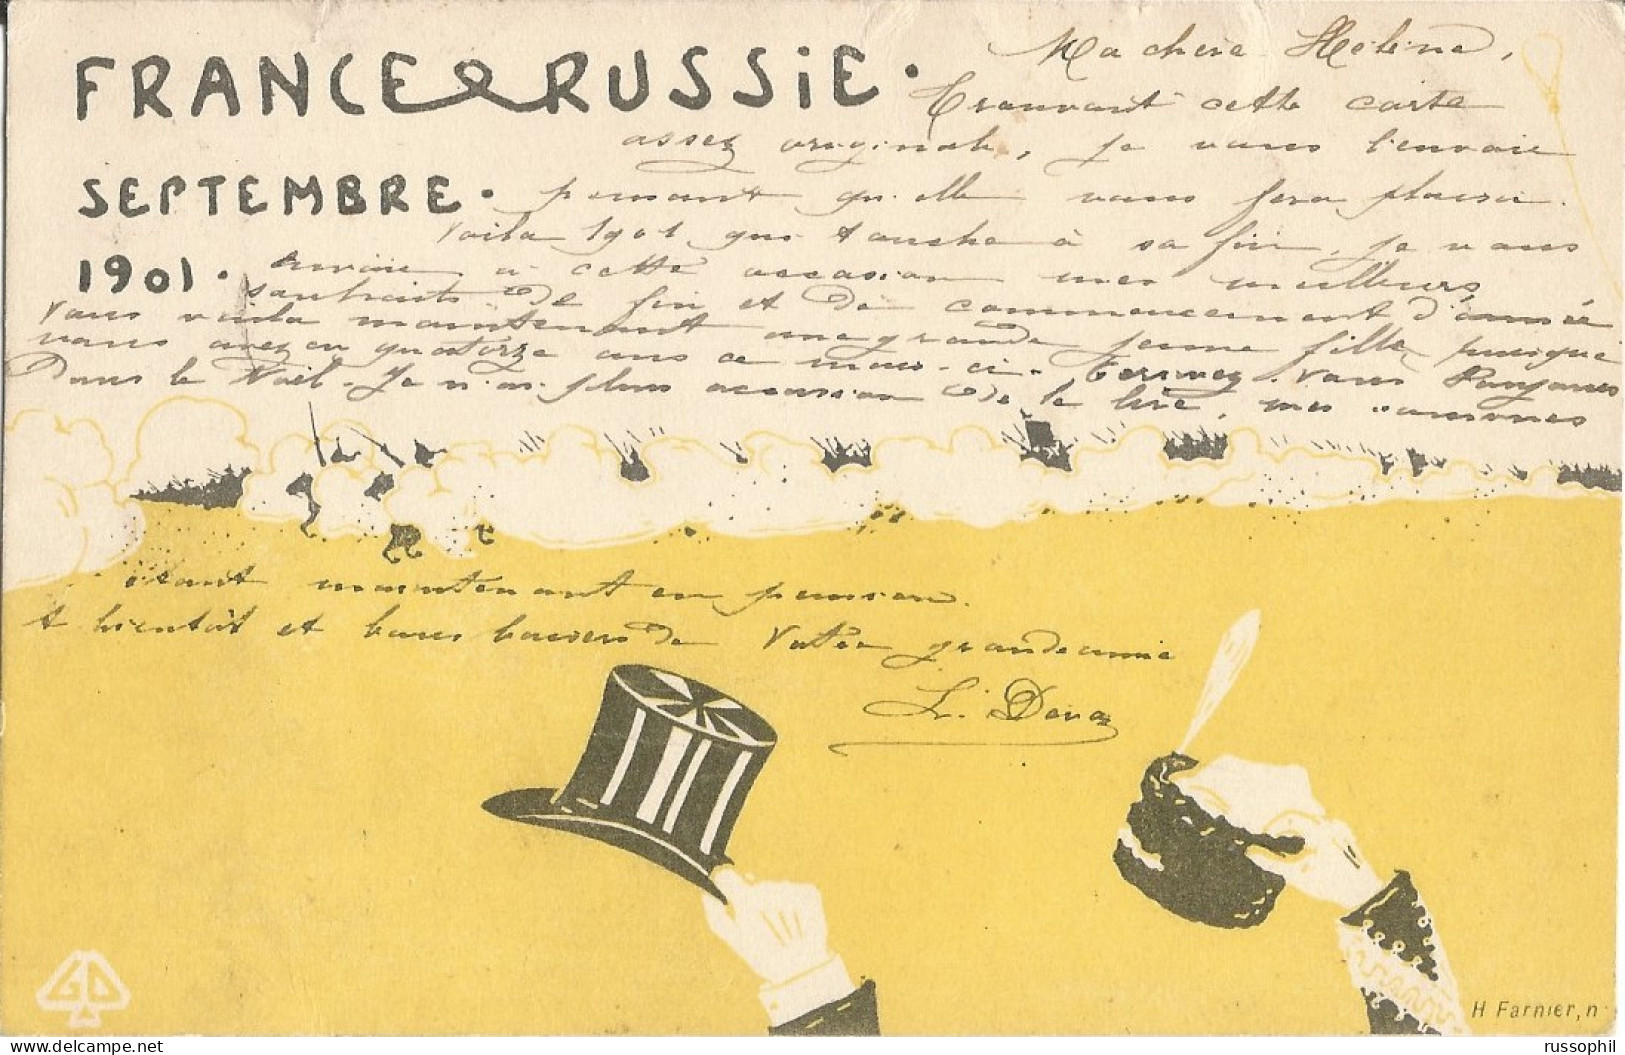 FRANCO RUSSIAN ALLIANCE - FRANCE RUSSIE SEPTEMBRE 1901 - H. FARNIER N° 6 - 1901 - Eventos